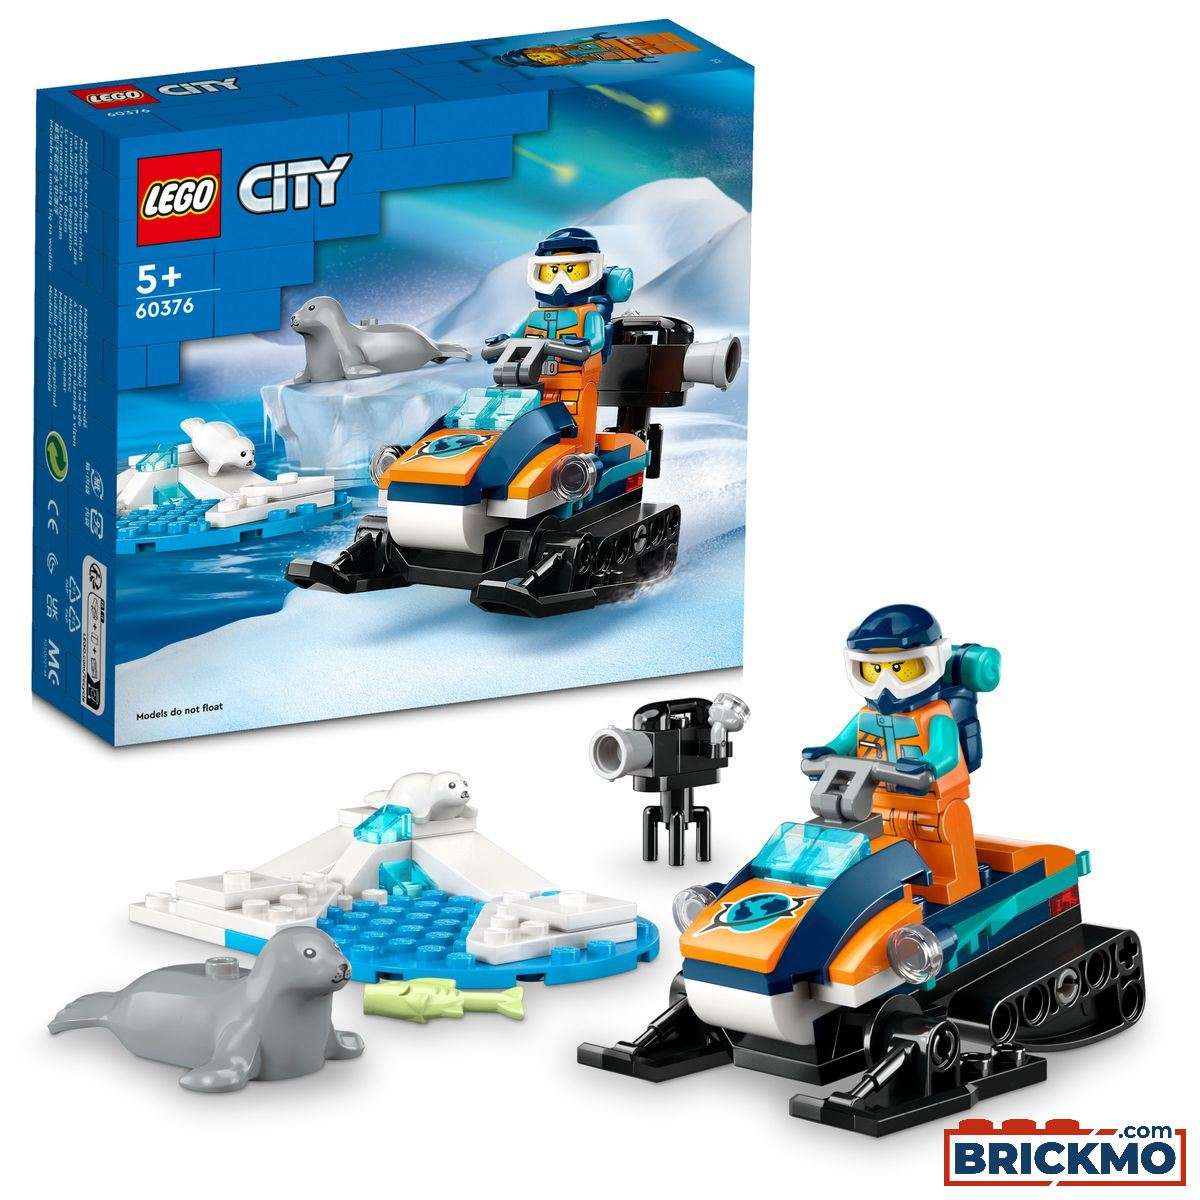 LEGO City 60376 Arctic Explorer Snowmobile 60376